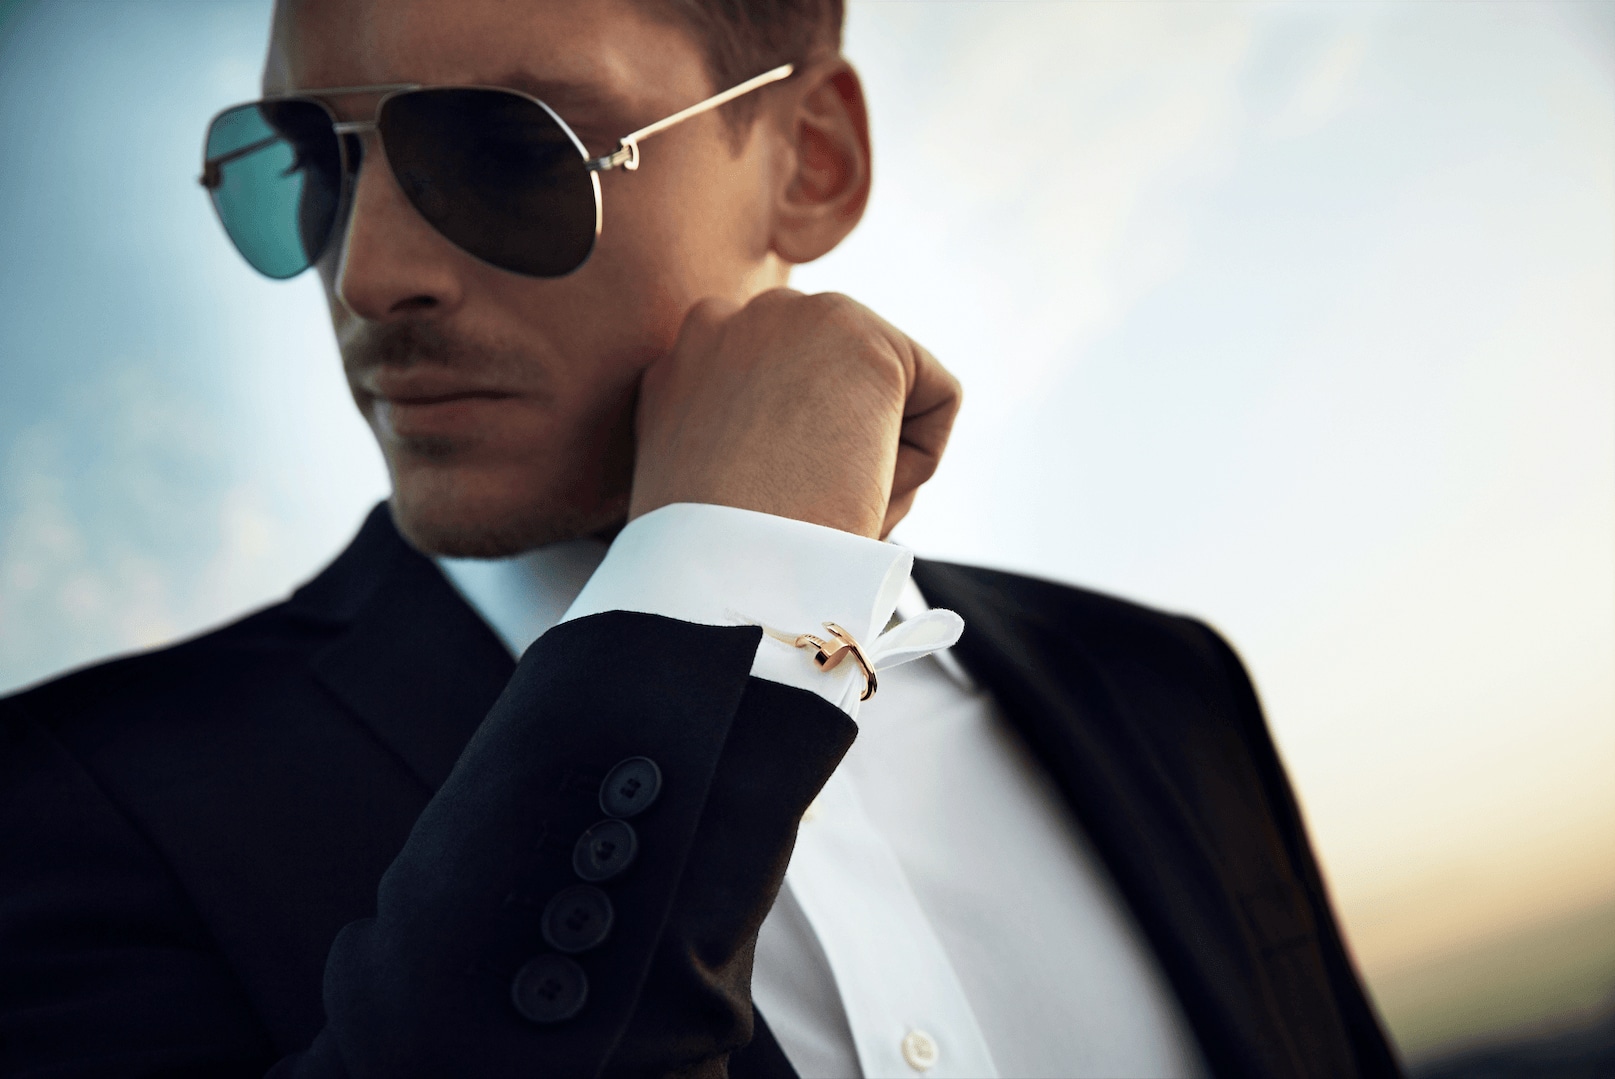 Cufflinks and Studs for Men-Mens Fashion Cufflinks and Tuxedo Shirt Studs Set for Regular Weeding Business Accessories